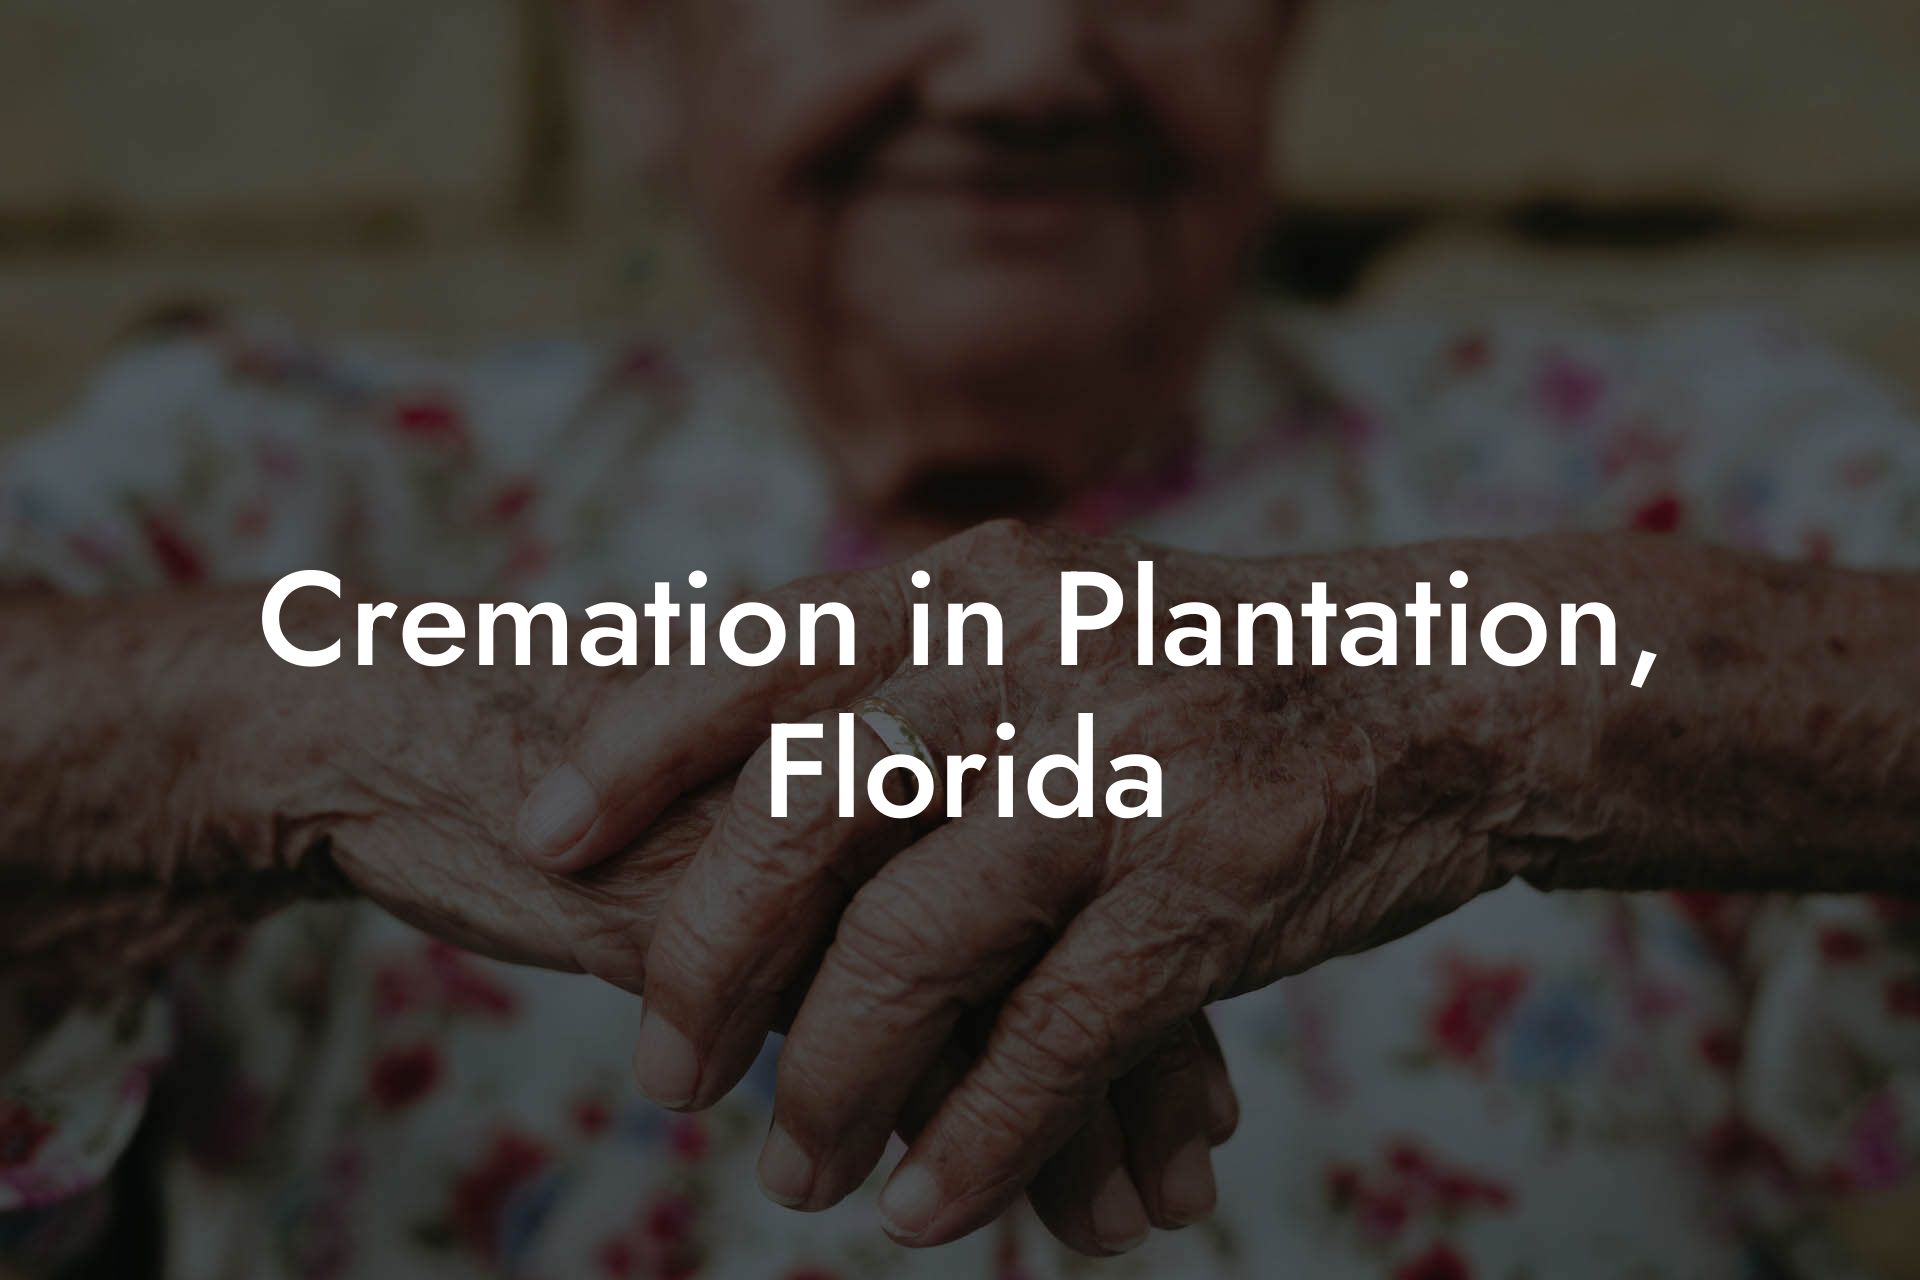 Cremation in Plantation, Florida